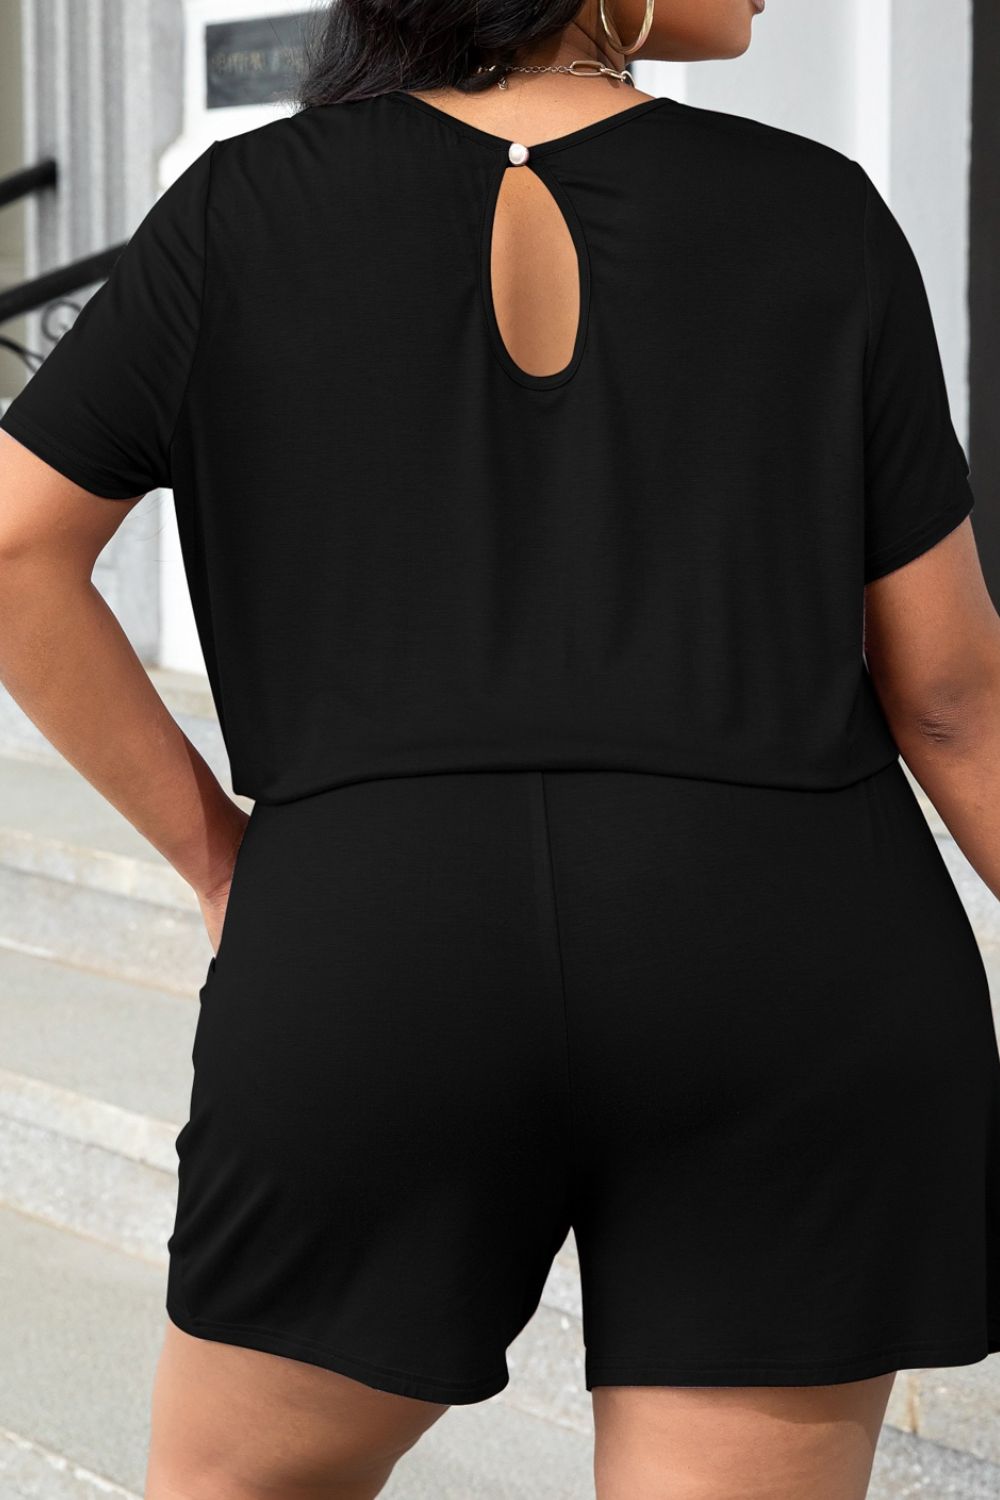 Black Plus Size Drawstring Waist Romper with Pockets Plus Size Clothes